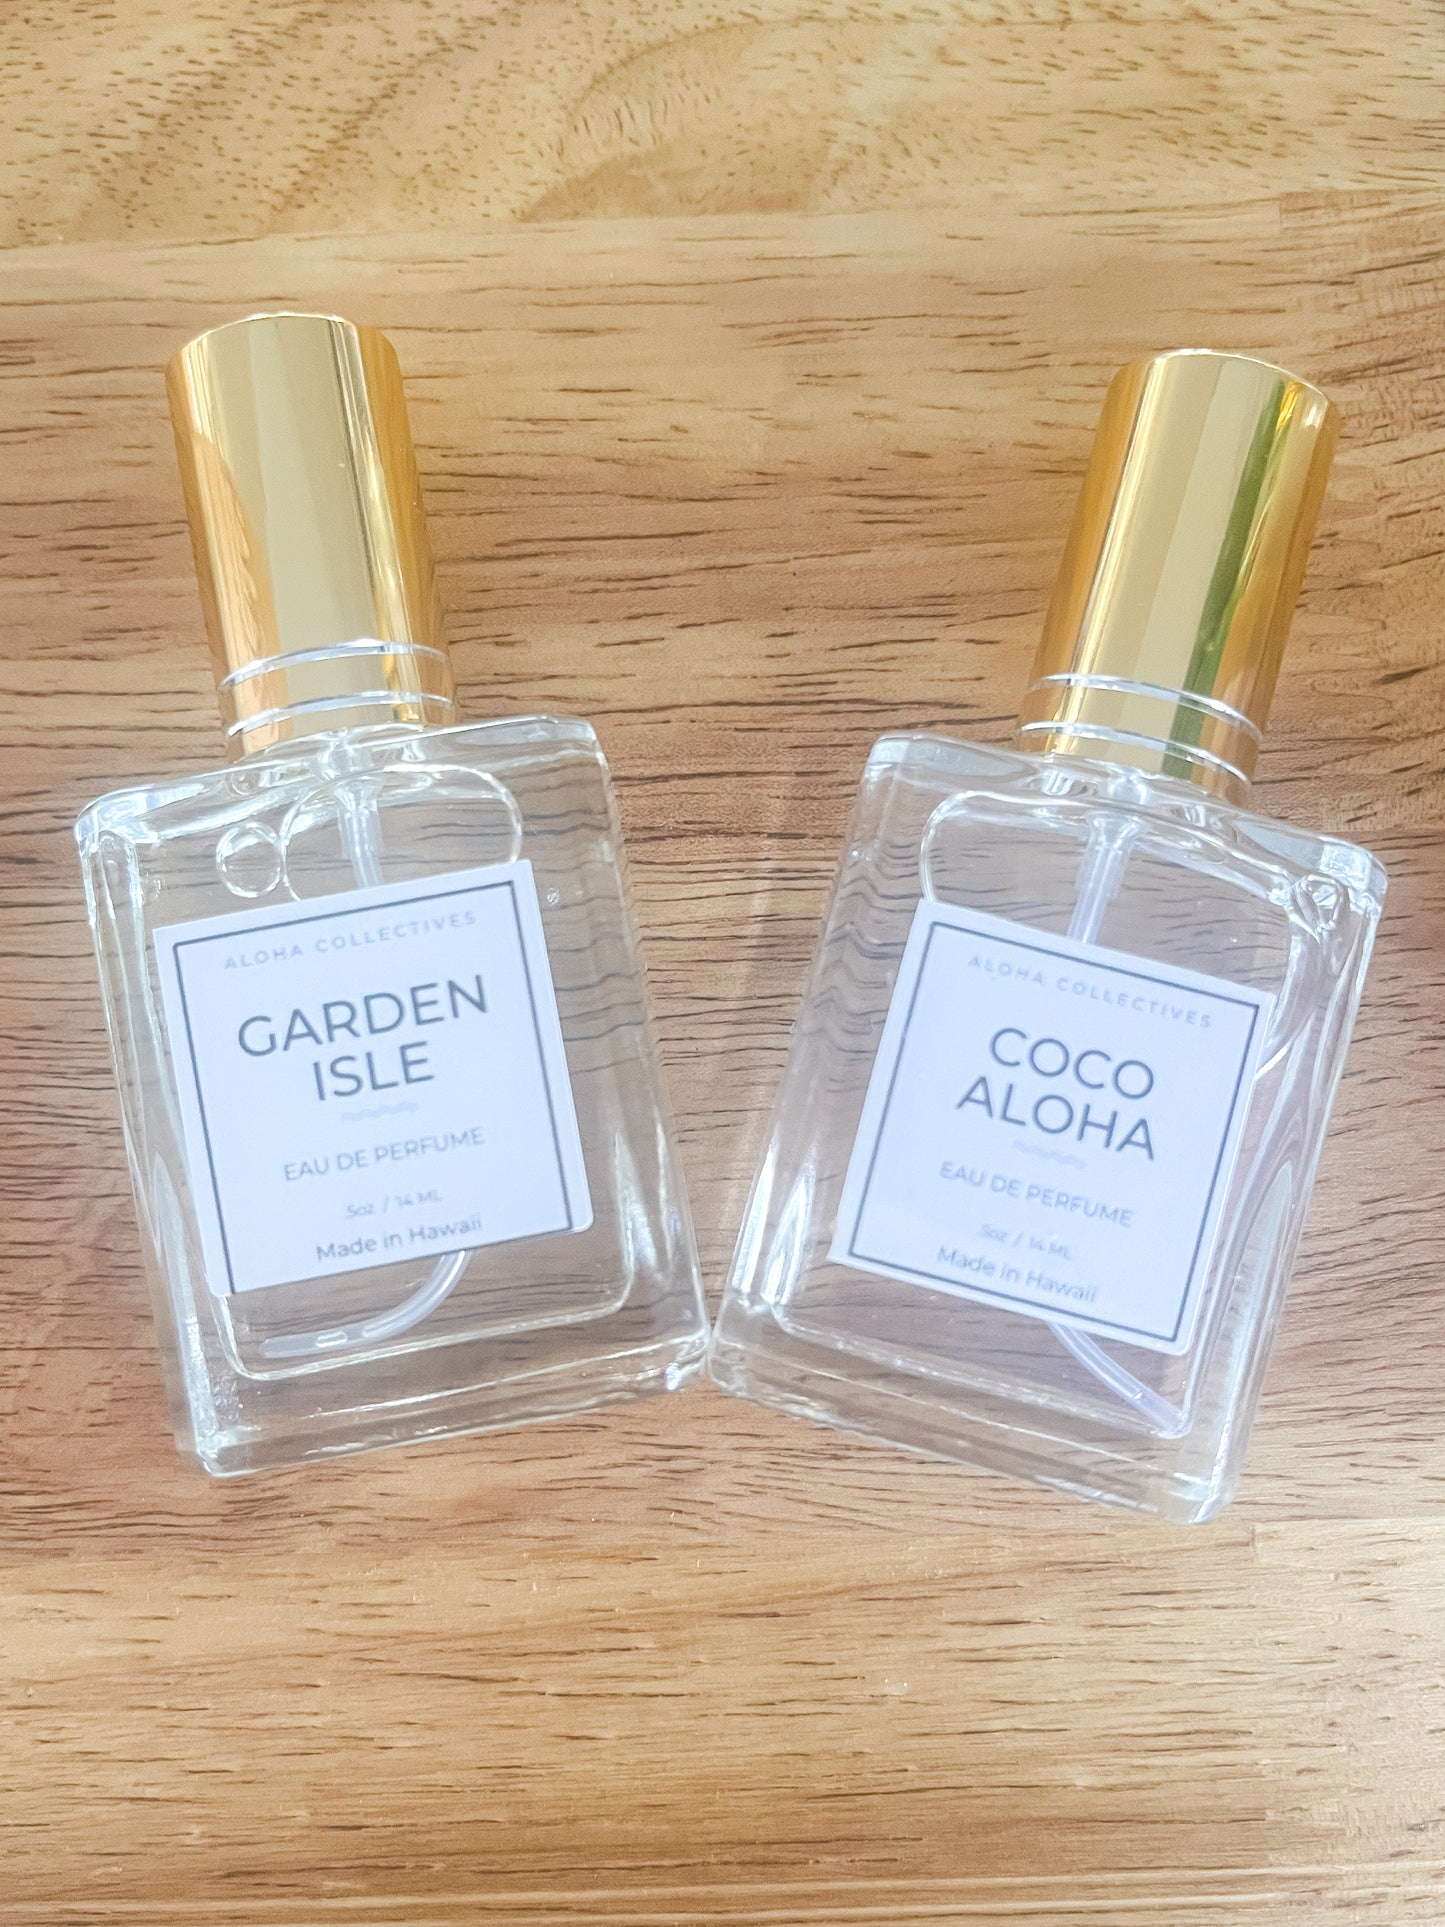 Garden Isle Travel Perfume